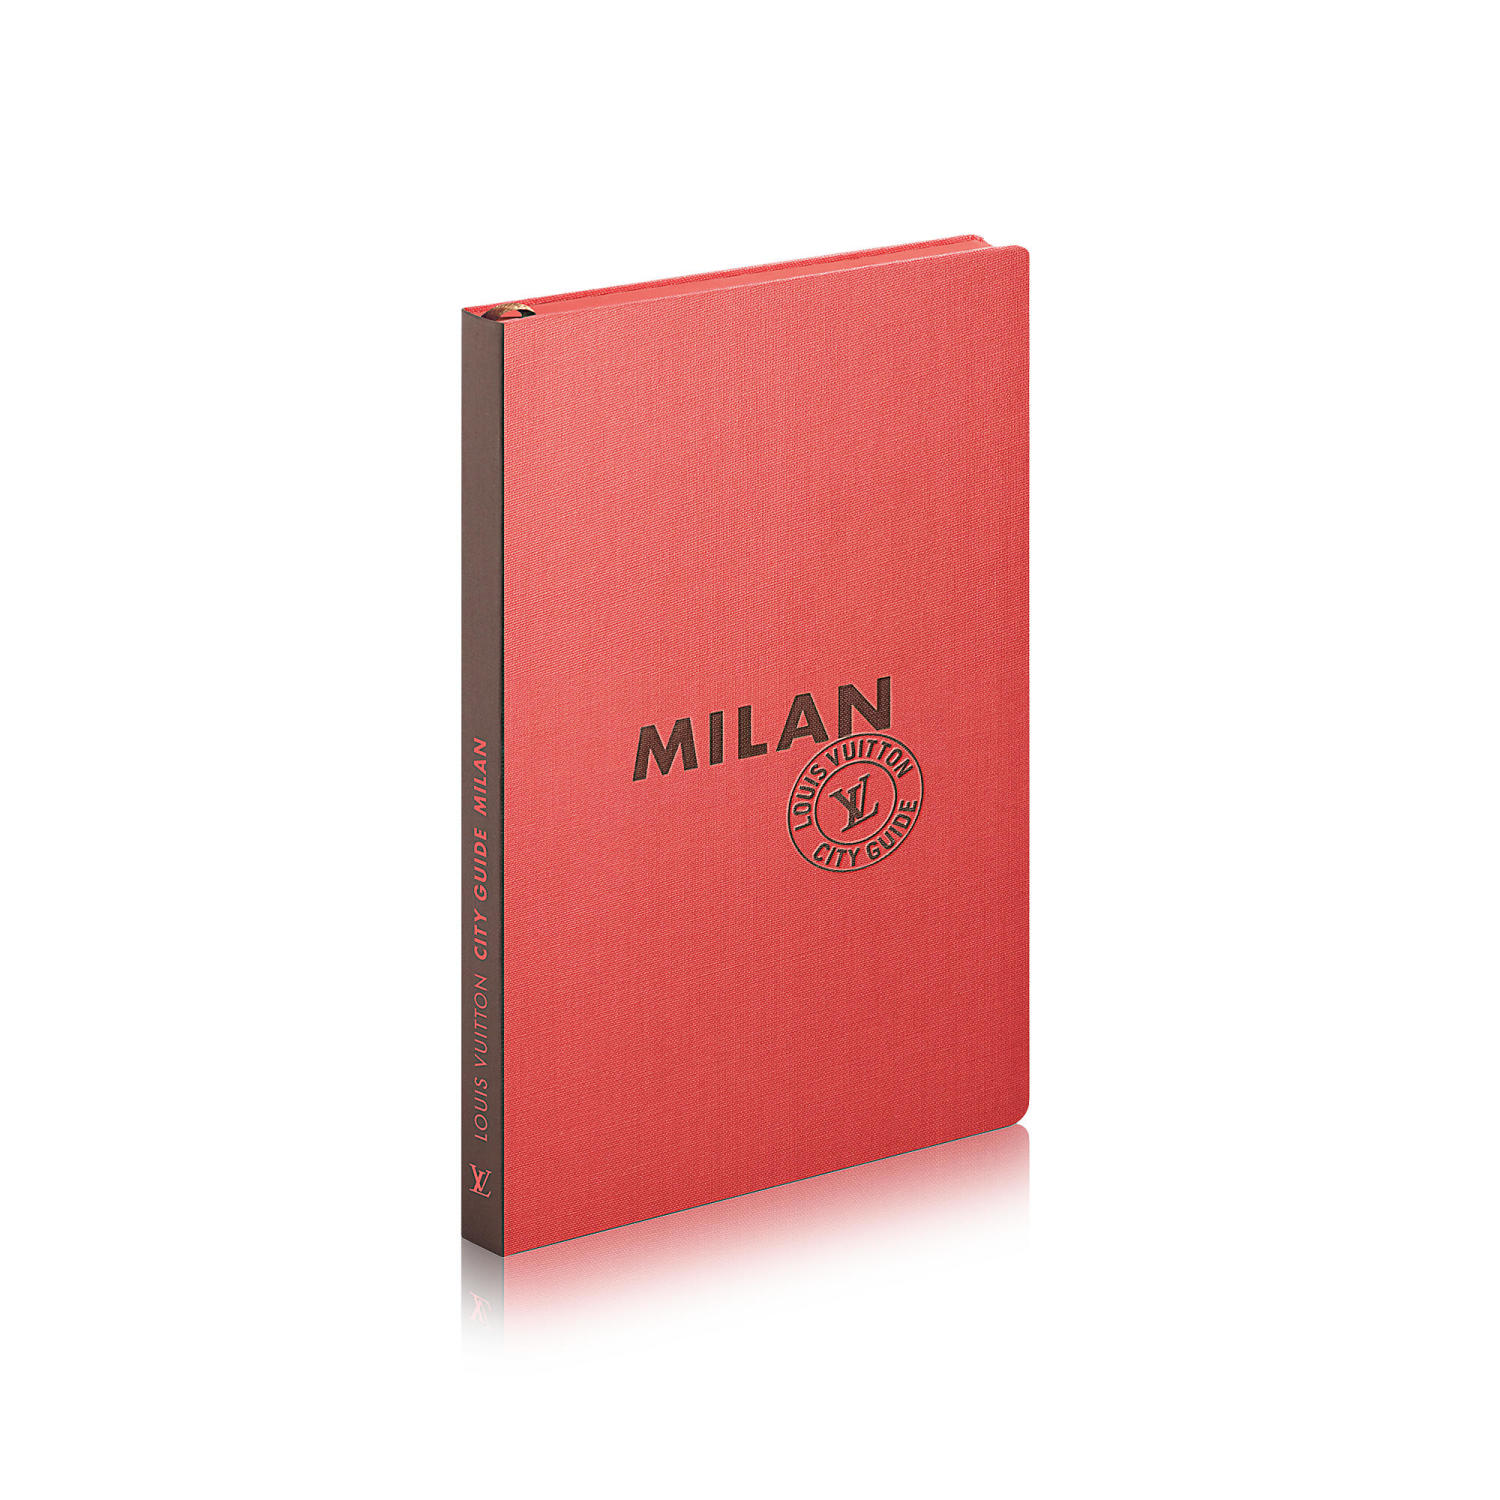 Louis Vuitton Milan City Guide - WhyNotMag